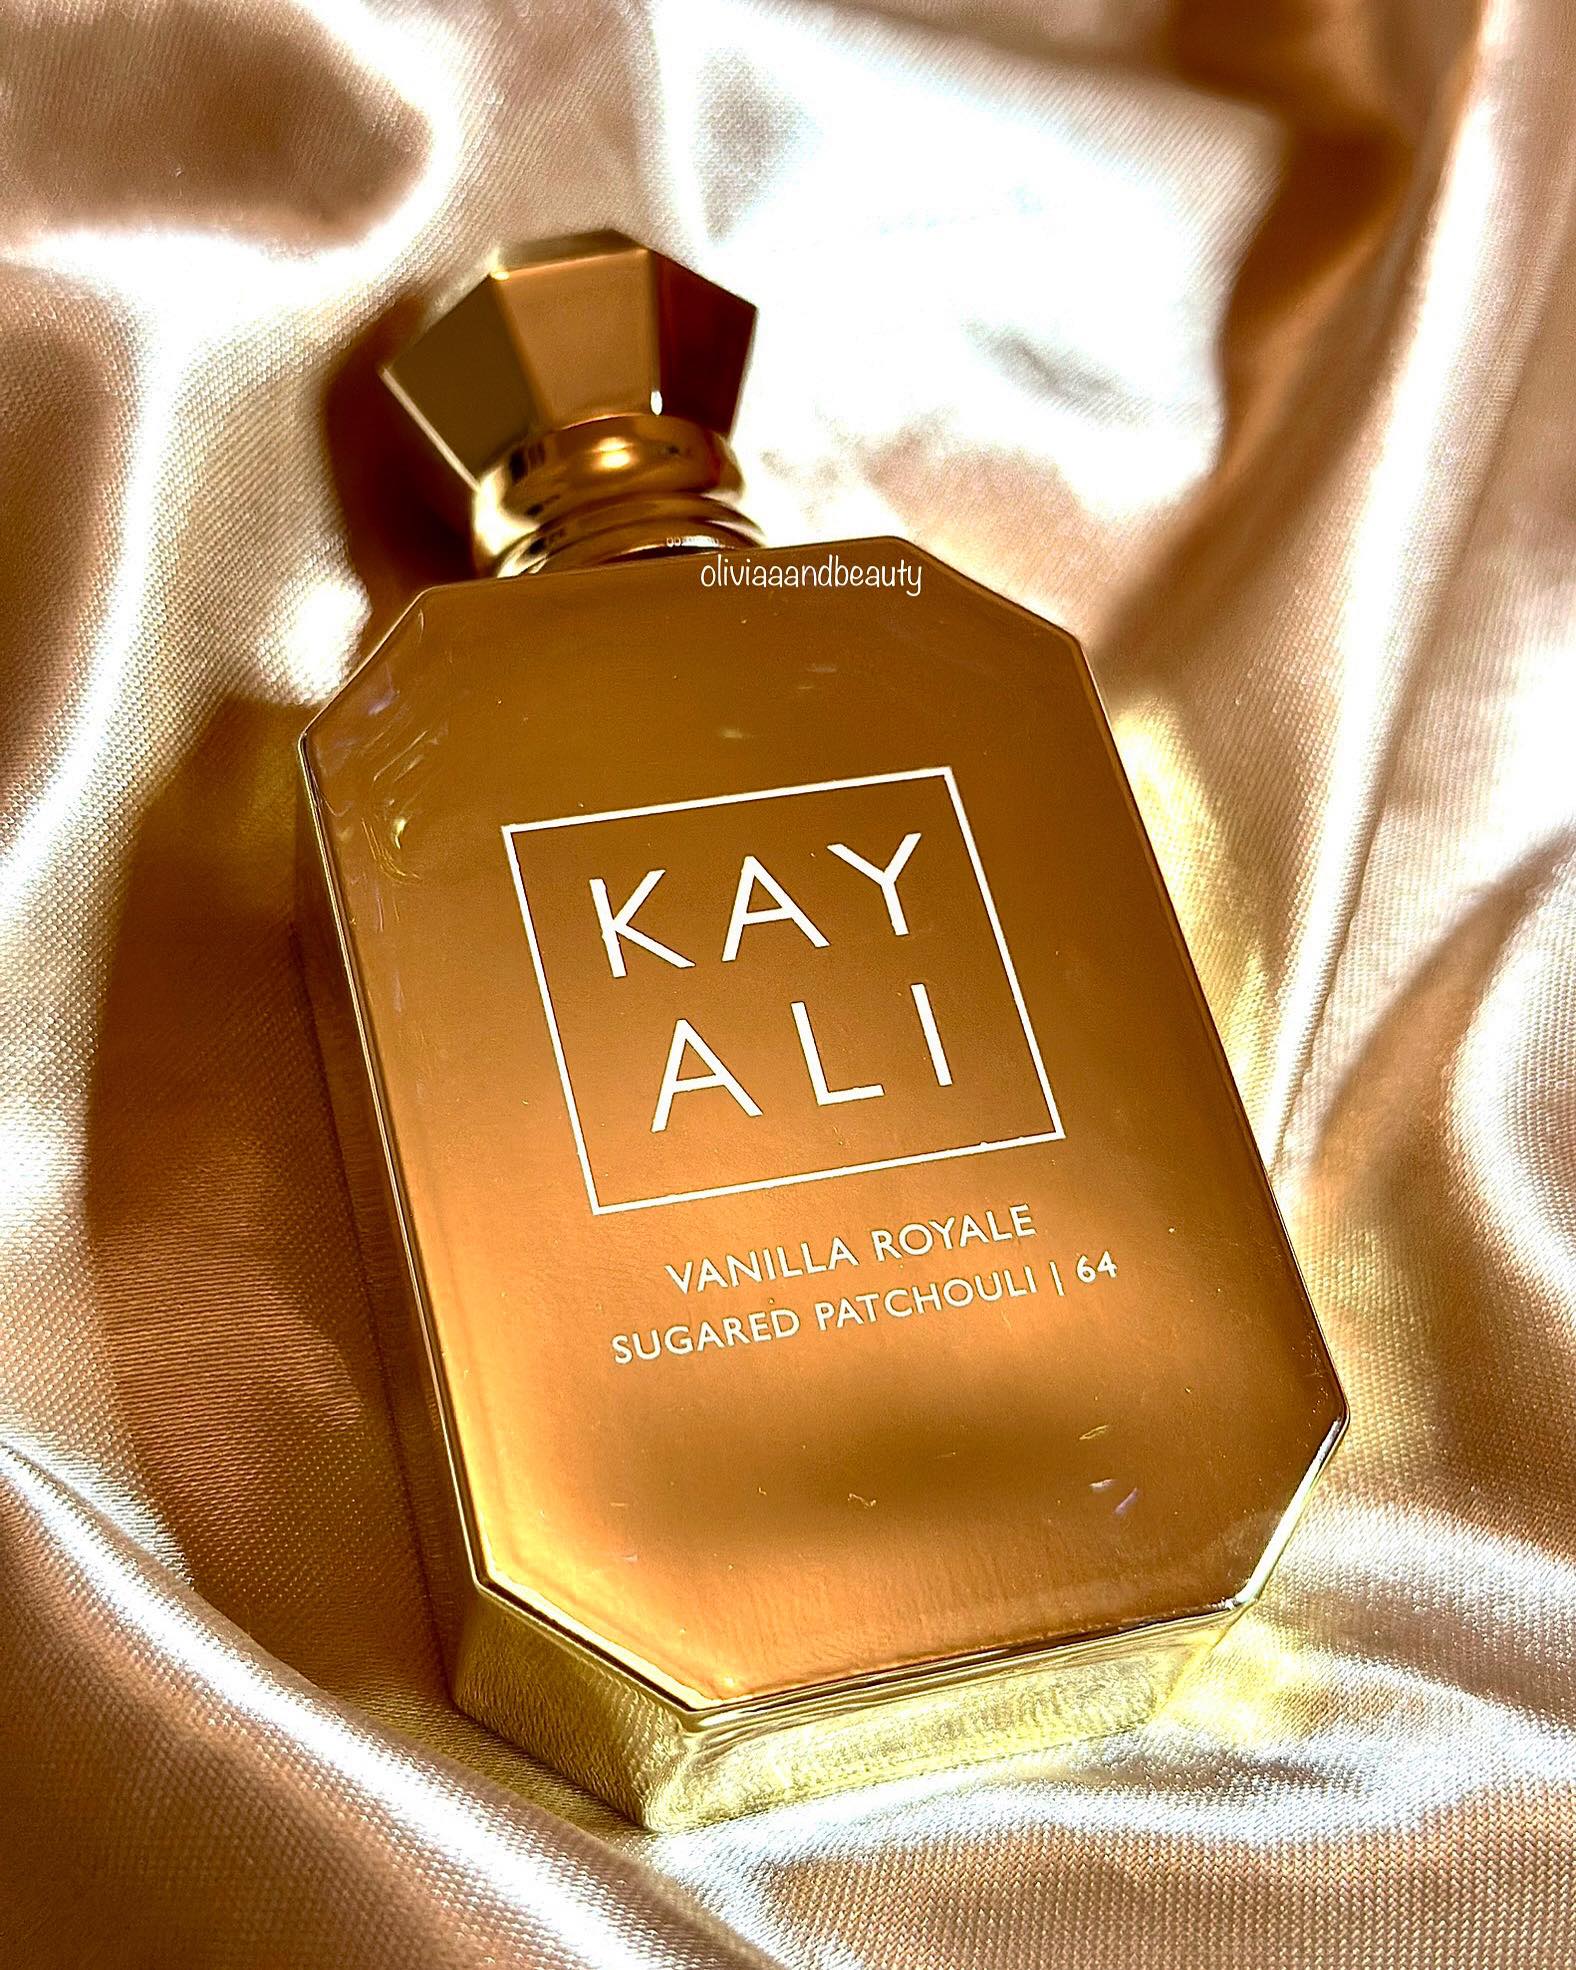 Kayali Vanilla Royale Sugared Patchouli, 64 Intense Fragrance Review